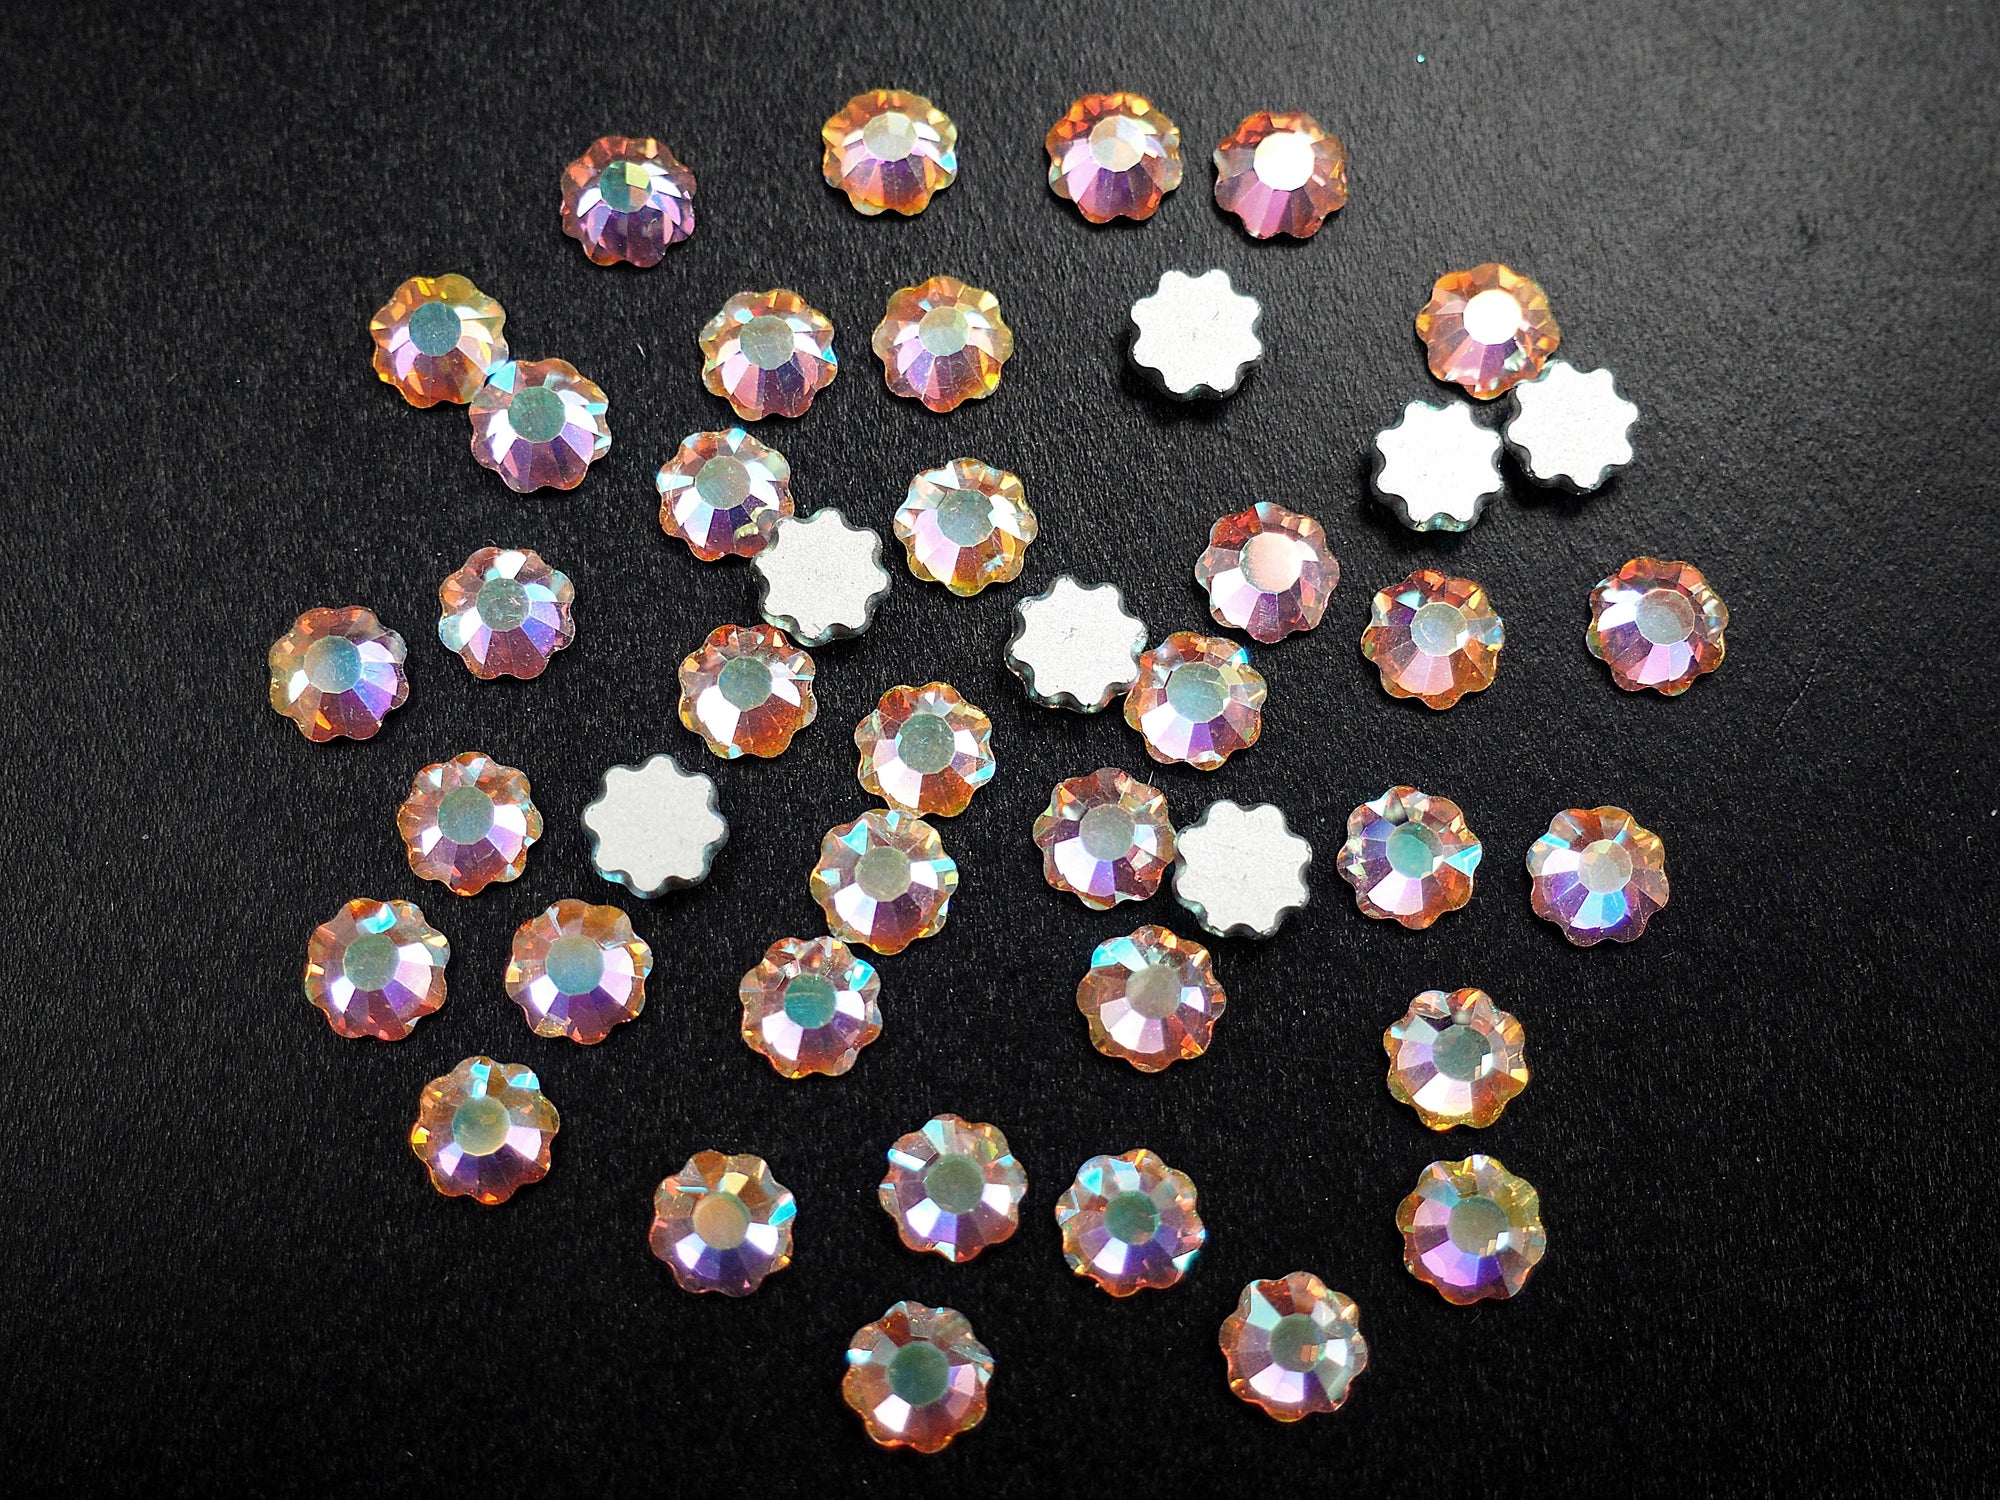 Crystal AB HOTFIX, Preciosa MC FLOWER Flatbacks Article 438-02-302, Genuine Czech Crystals, clear with Aurora Borealis coating